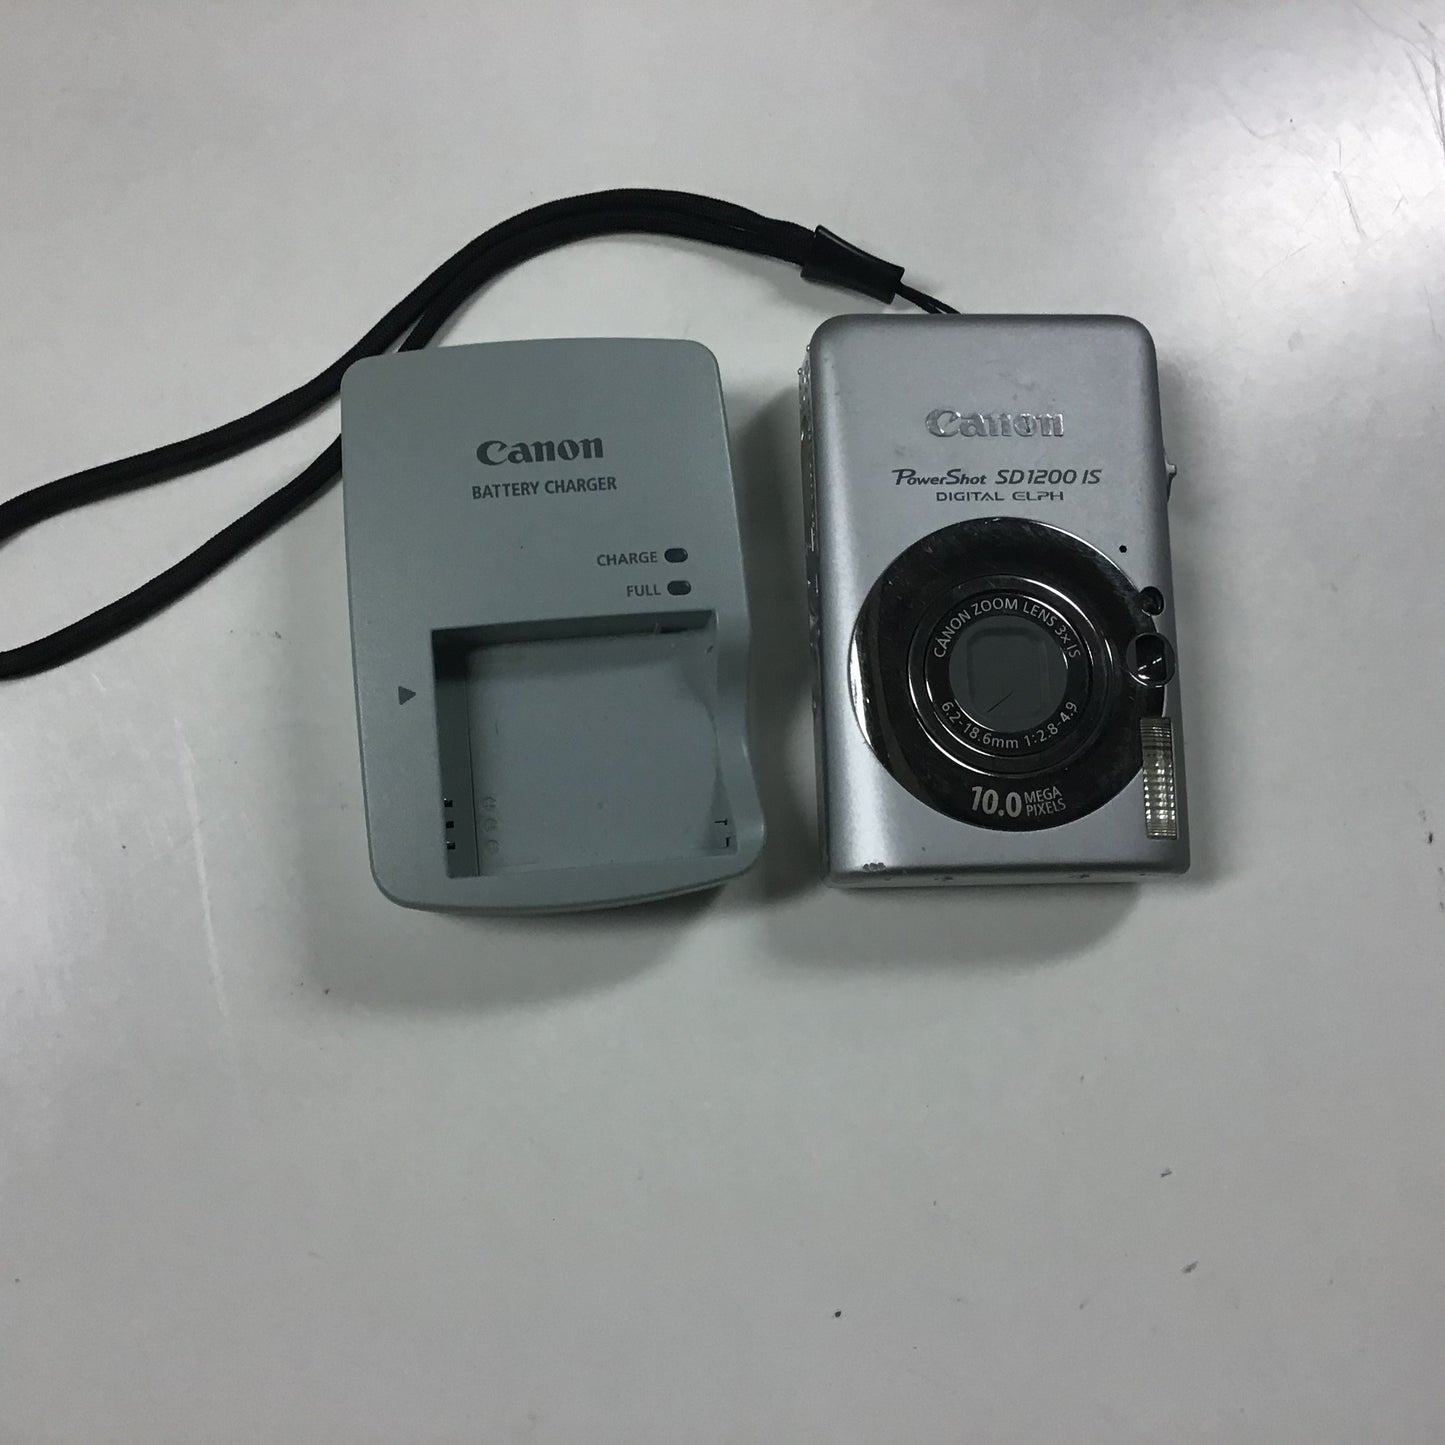 Canon PowerShot SD1200 IS